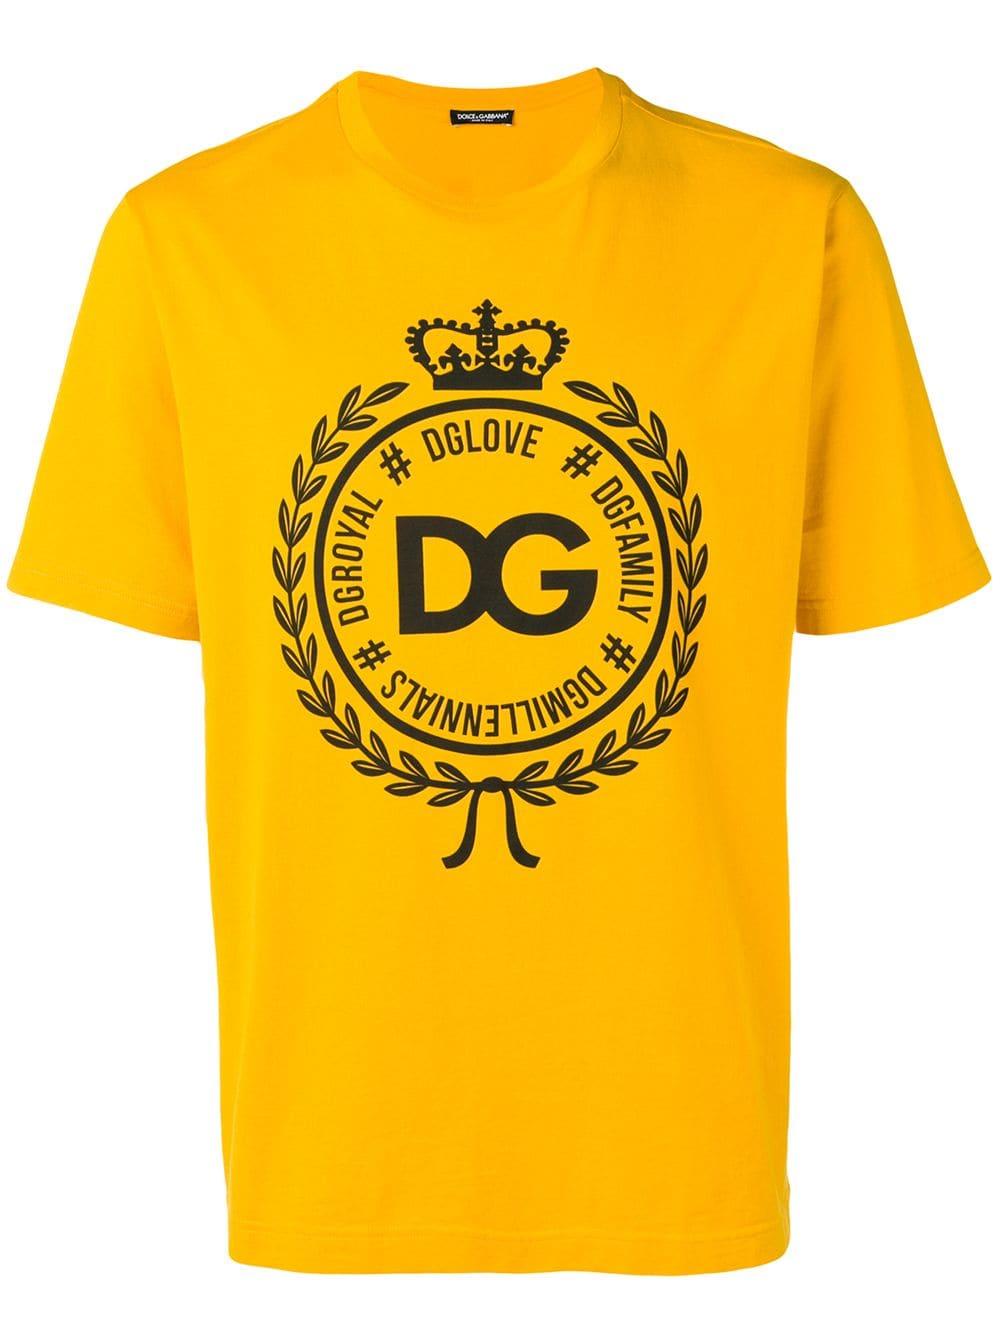 Dolce & Gabbana Logo Print T-shirt in Yellow for Men - Lyst